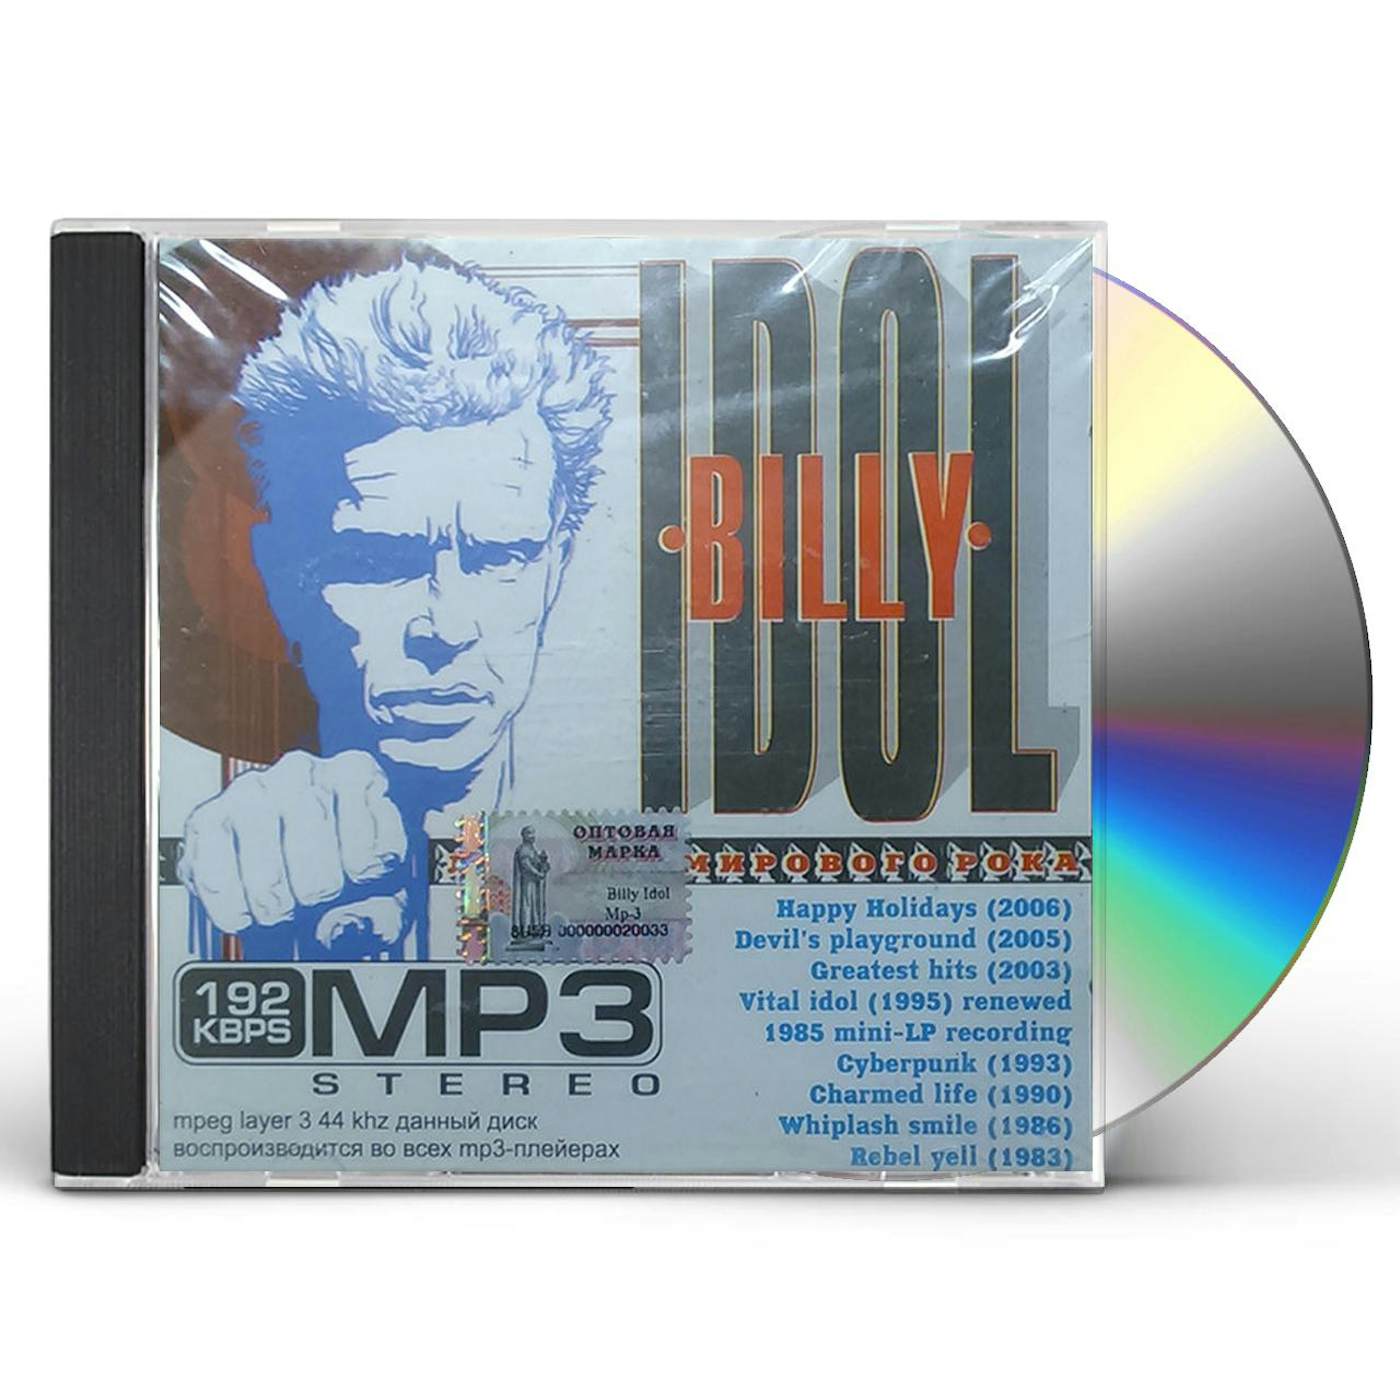 BILLY IDOL CD